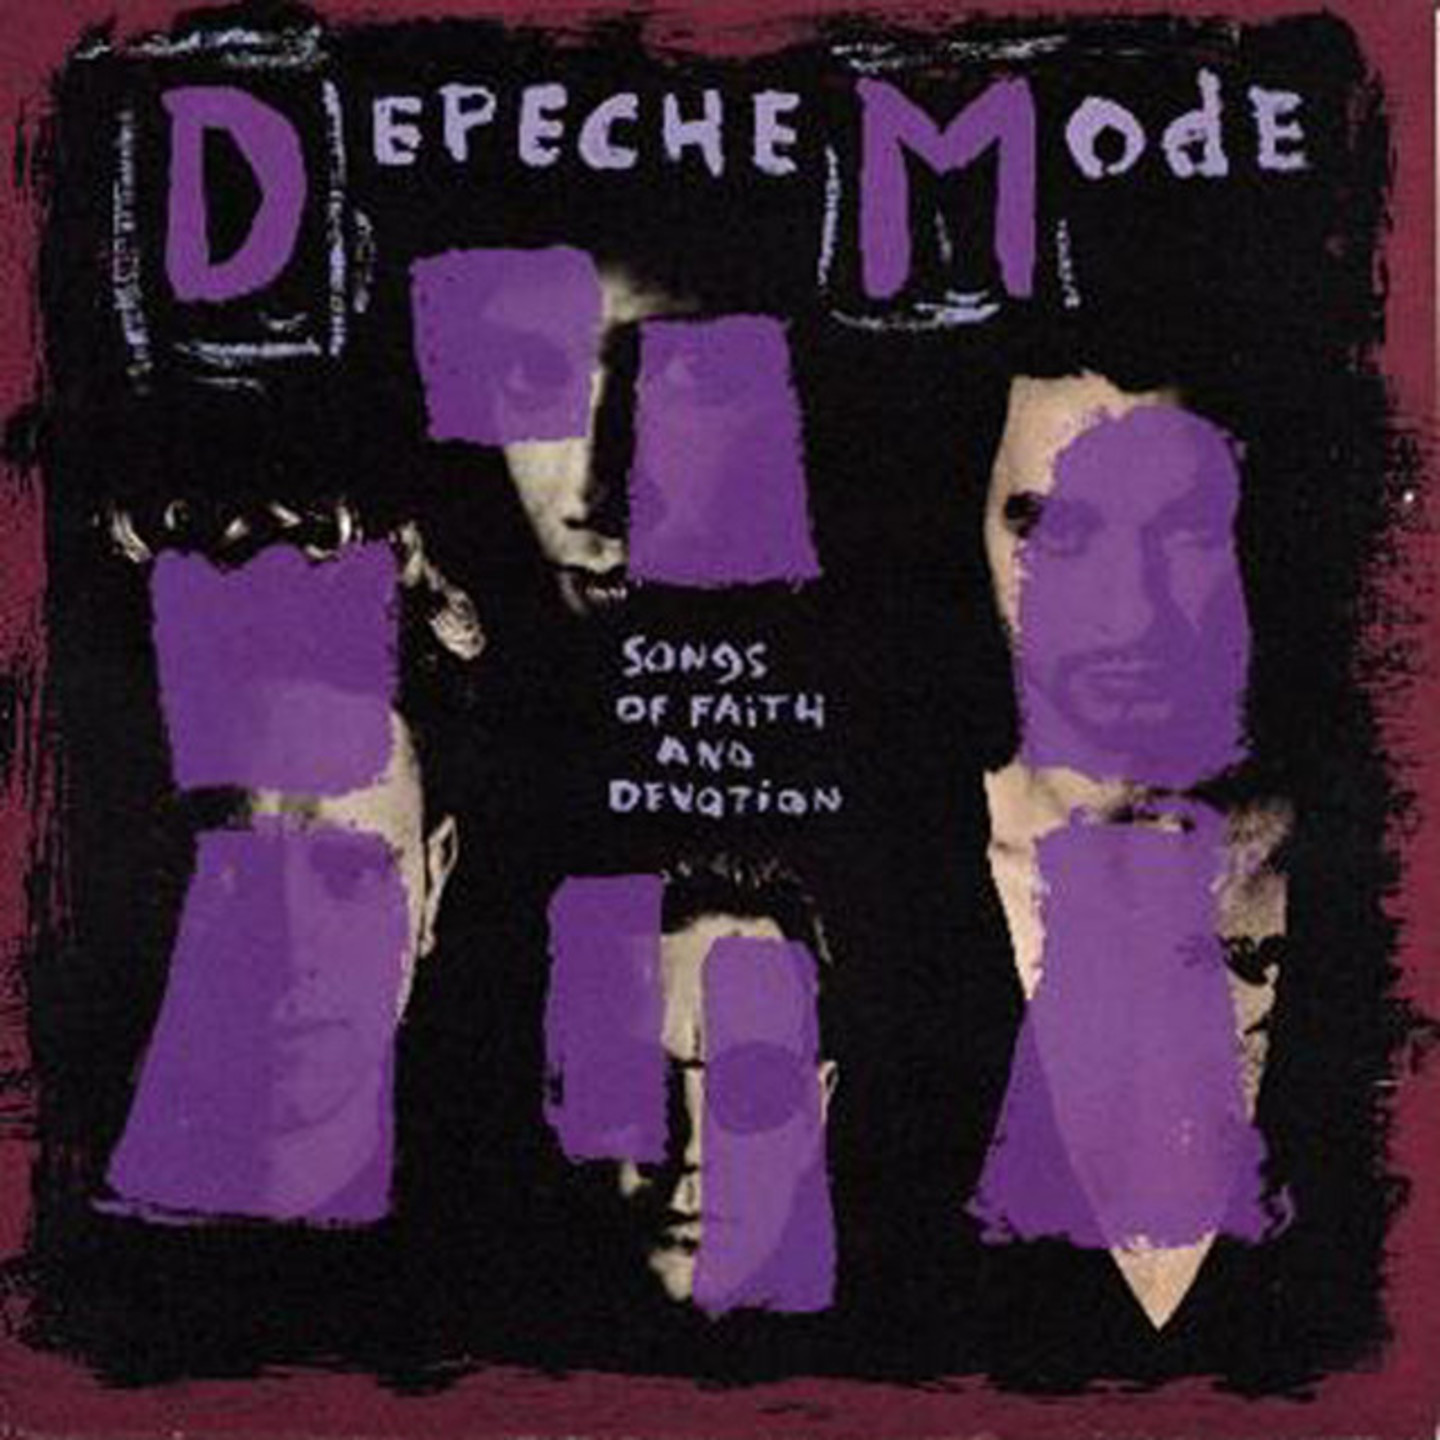 DEPECHE MODE - Songs Of Faith And Devotion LP